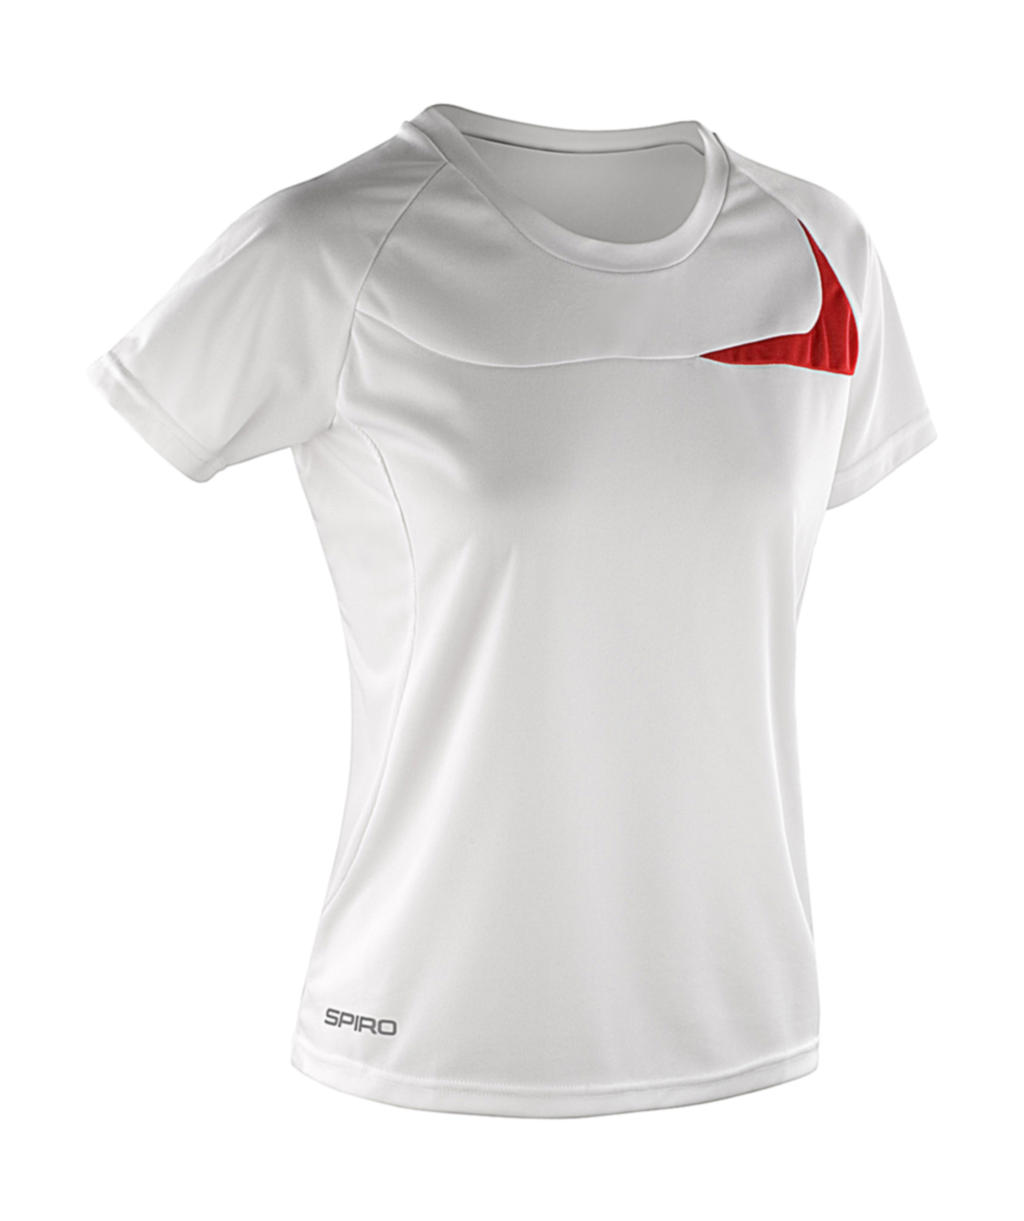  Spiro Ladies Dash Training Shirt in Farbe White/Red